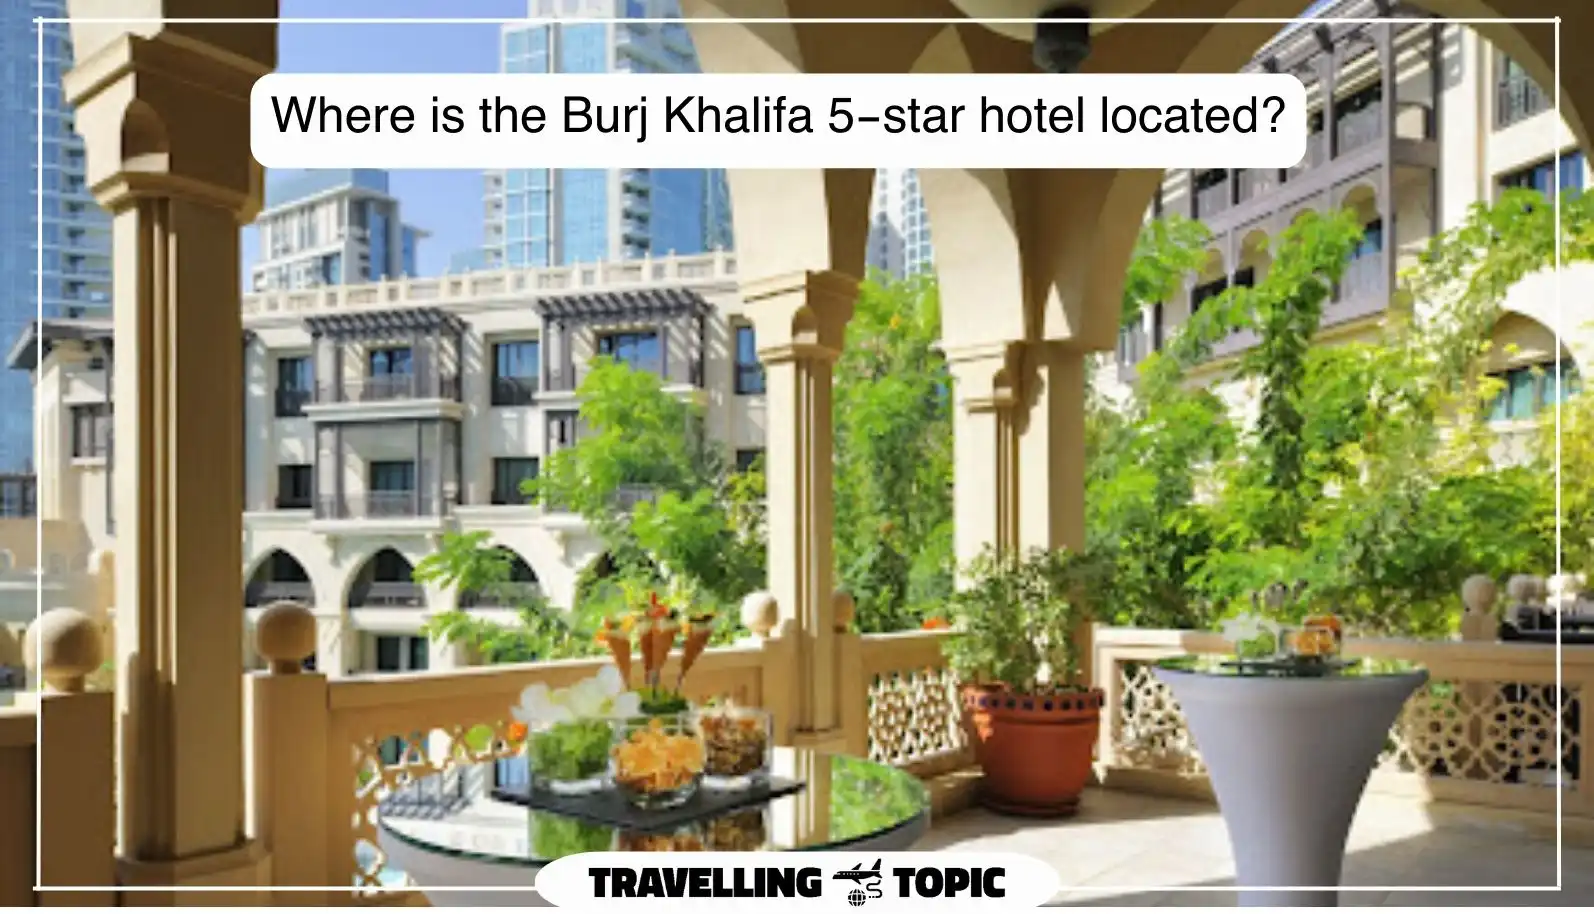 Where is the Burj Khalifa 5-star hotel located